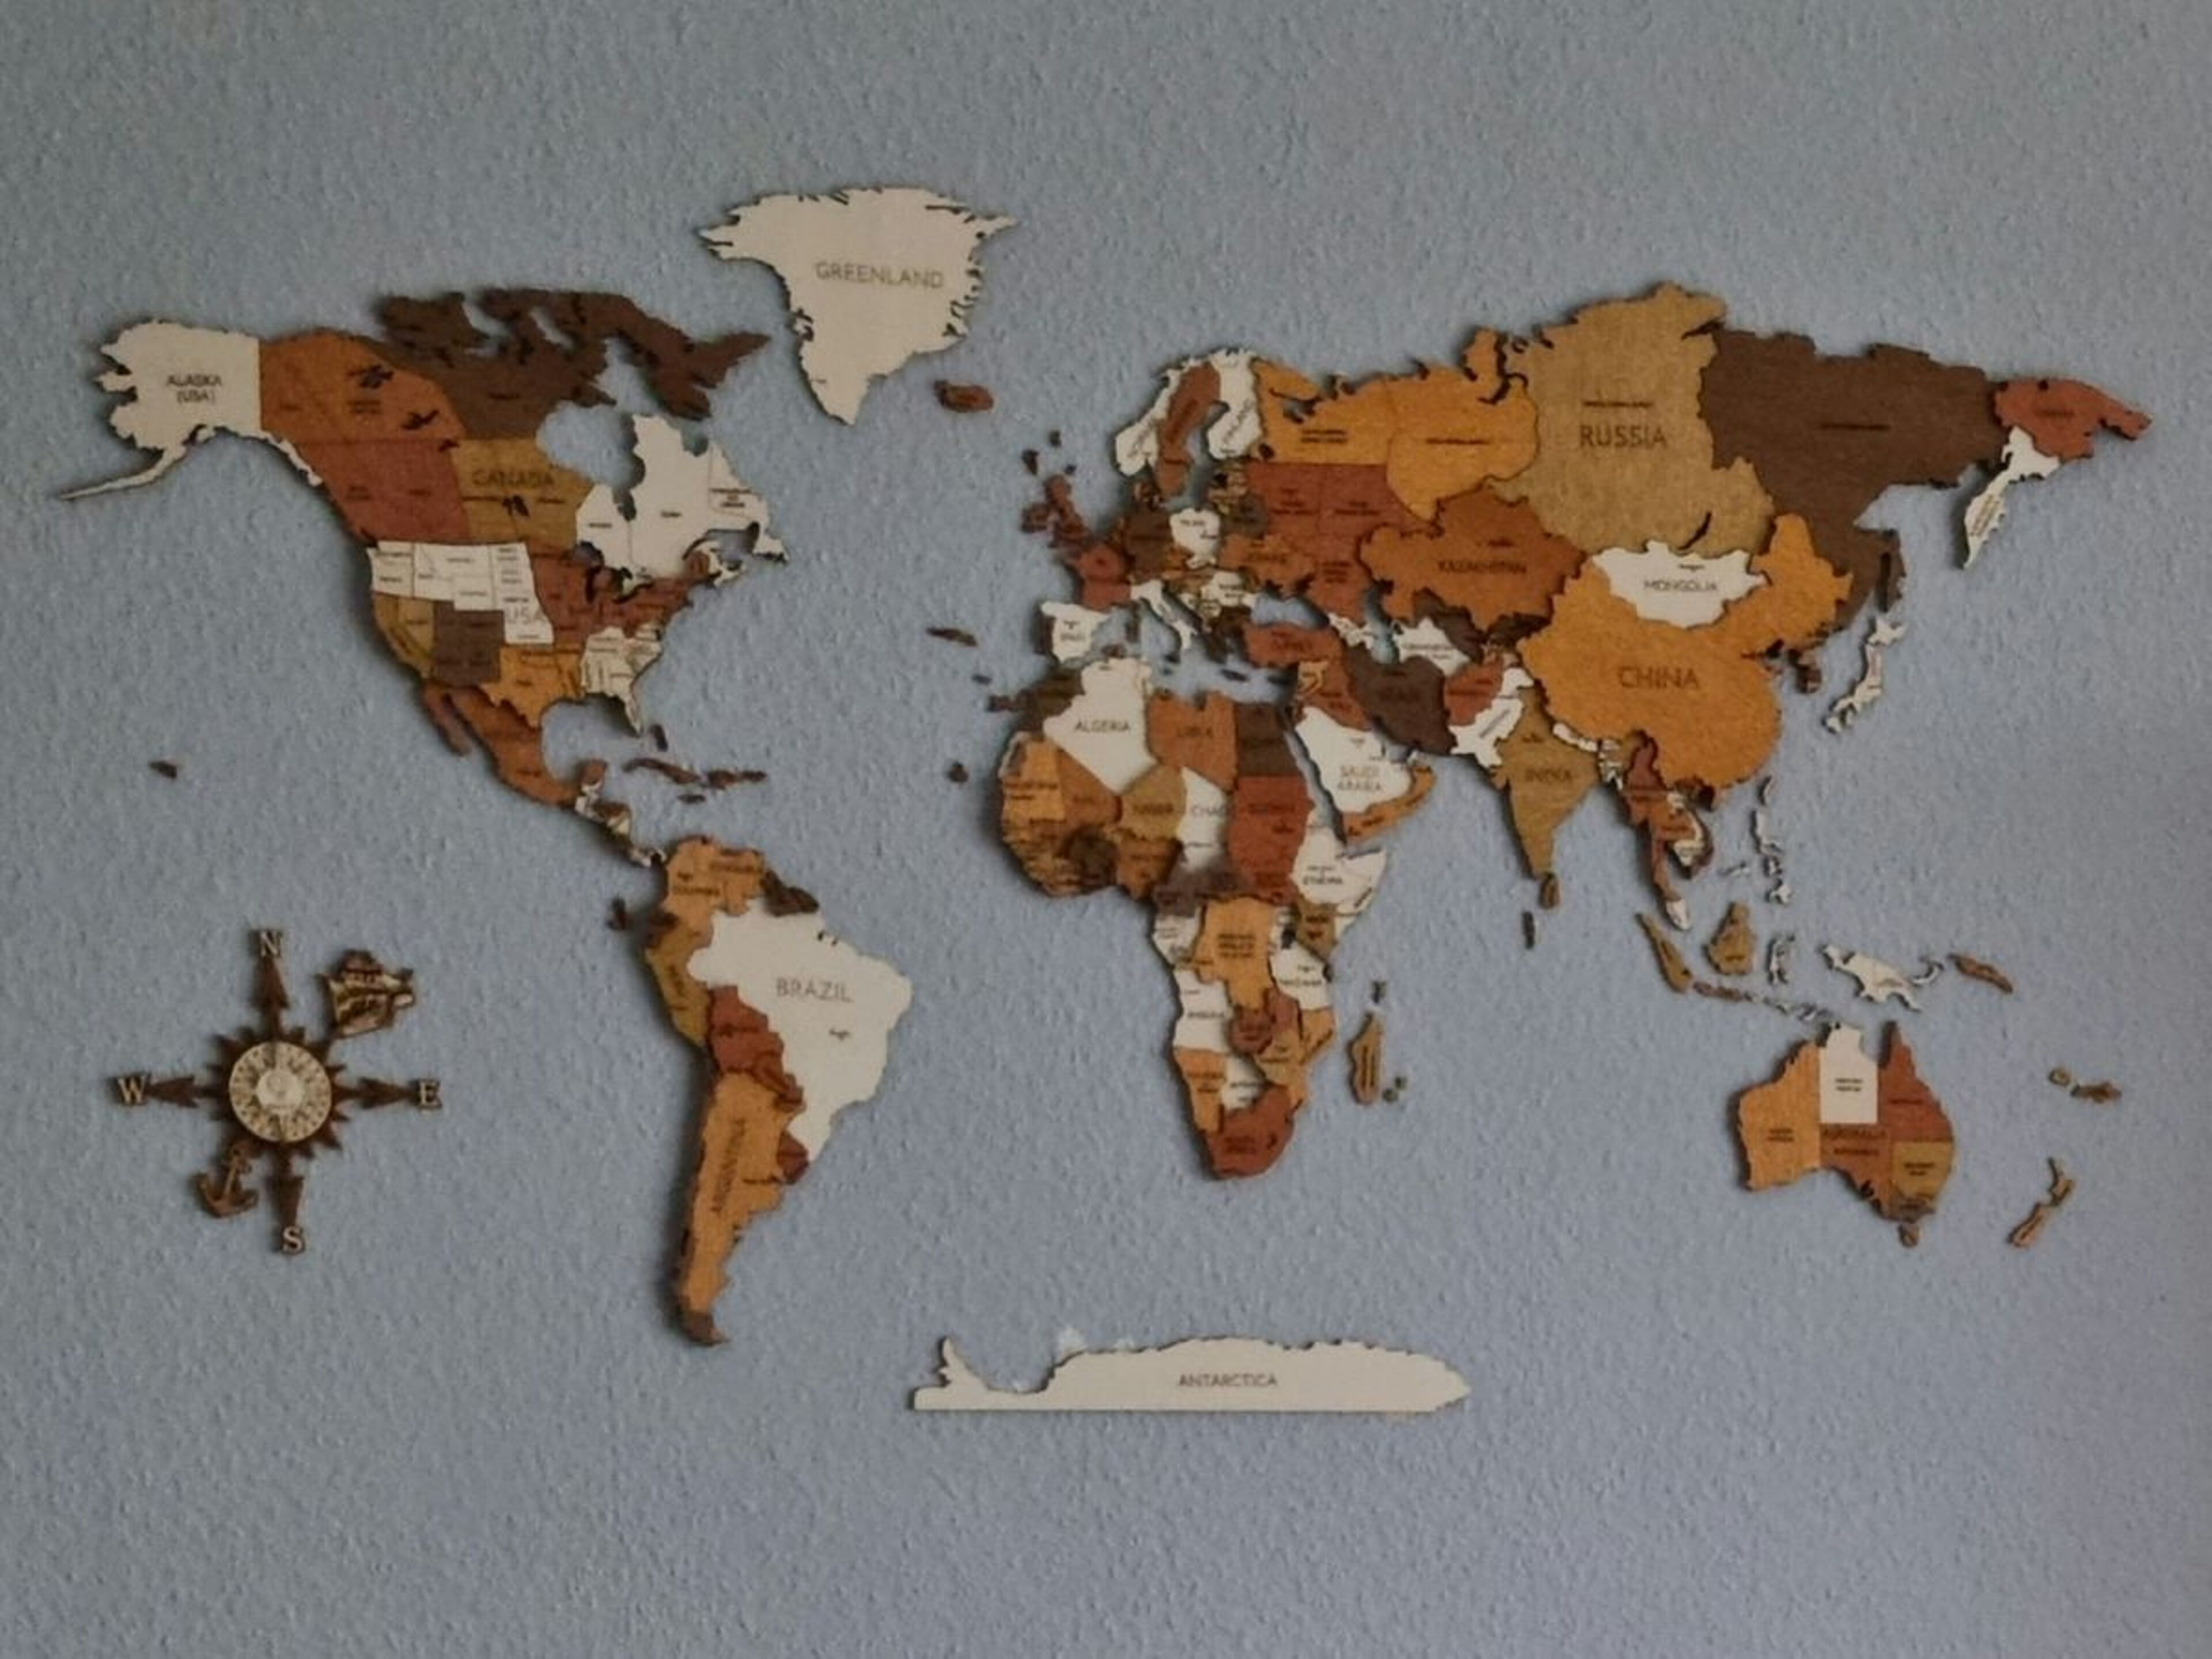 Reseña de Mapa del mundo de madera - imagen de Daniela